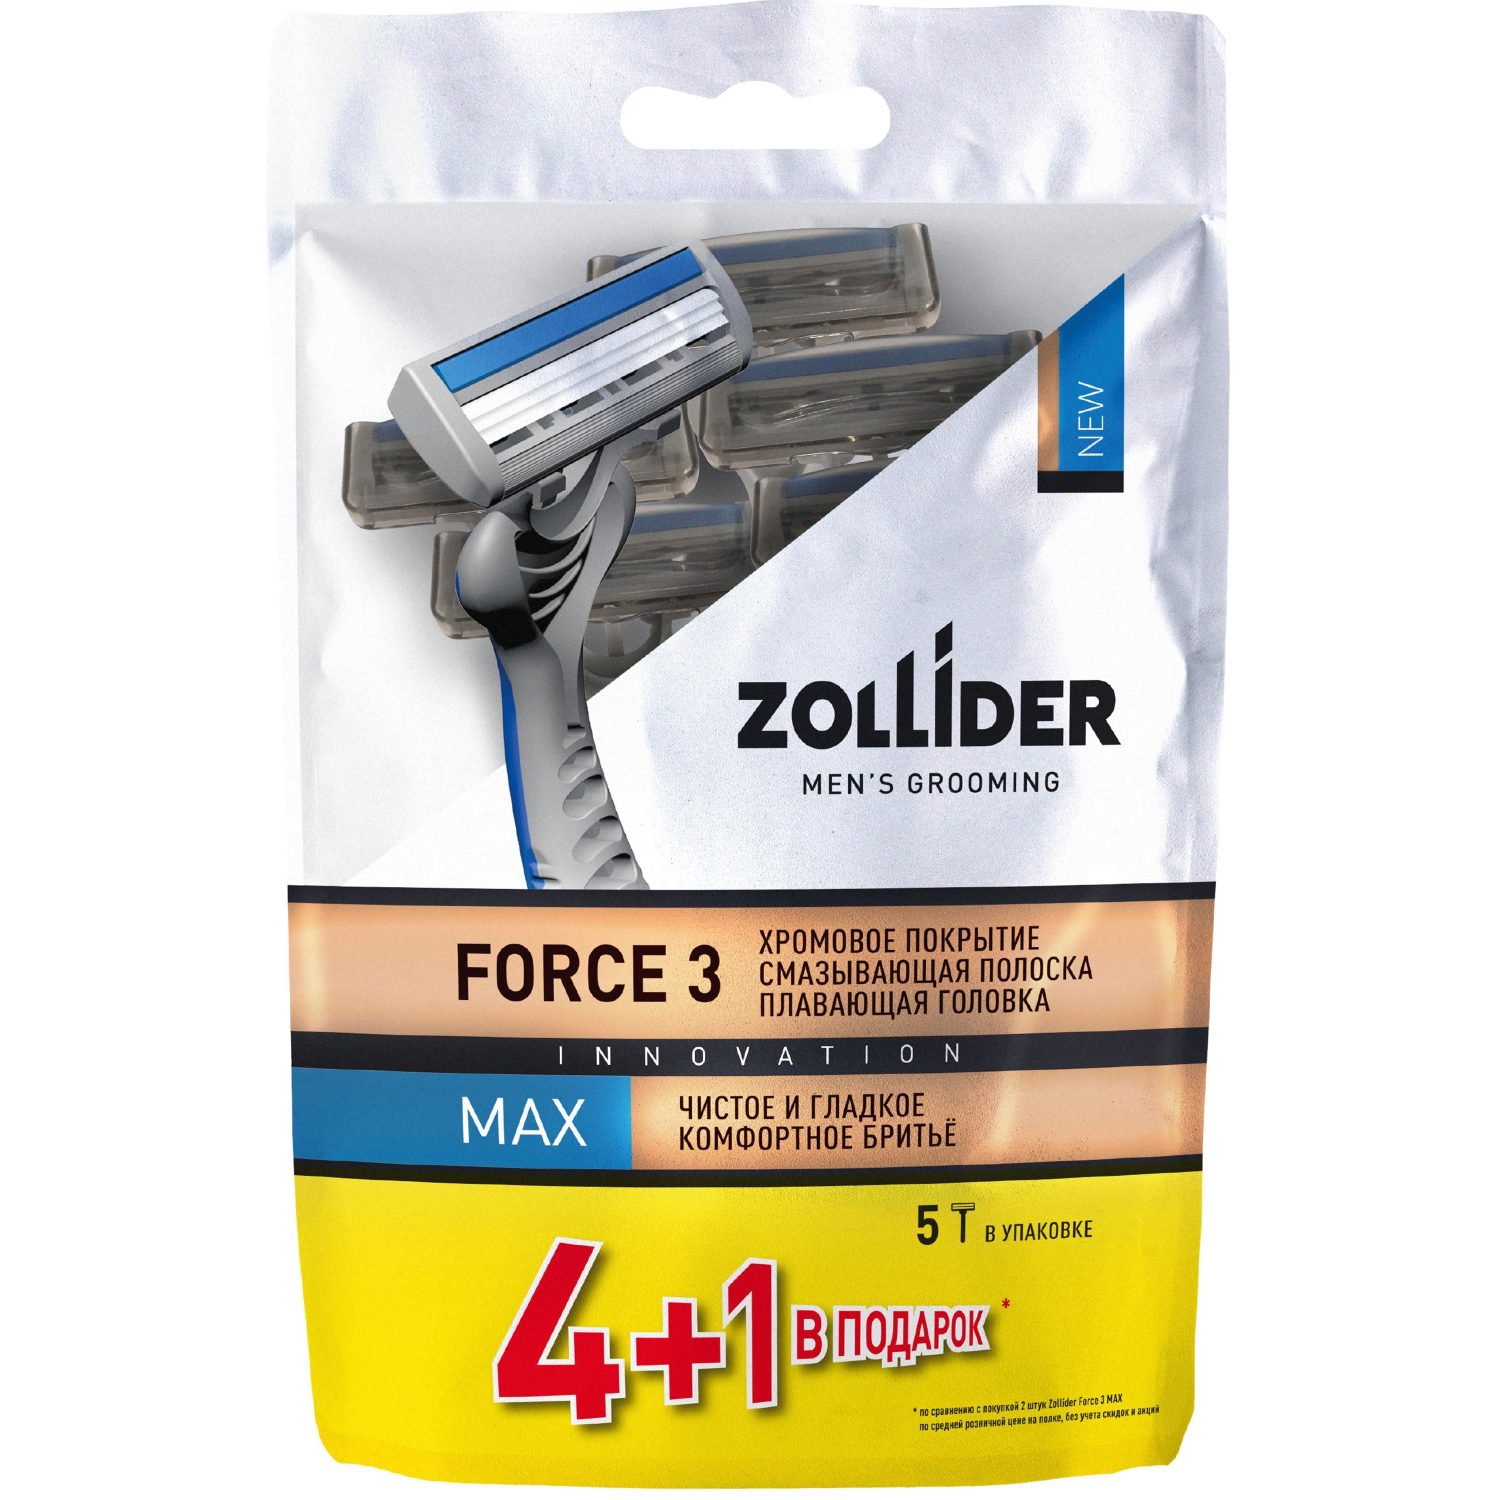 Одноразовые бритвенные станки Zollider Force 3 MAX 3 лезвия 4+1 шт цена и фото